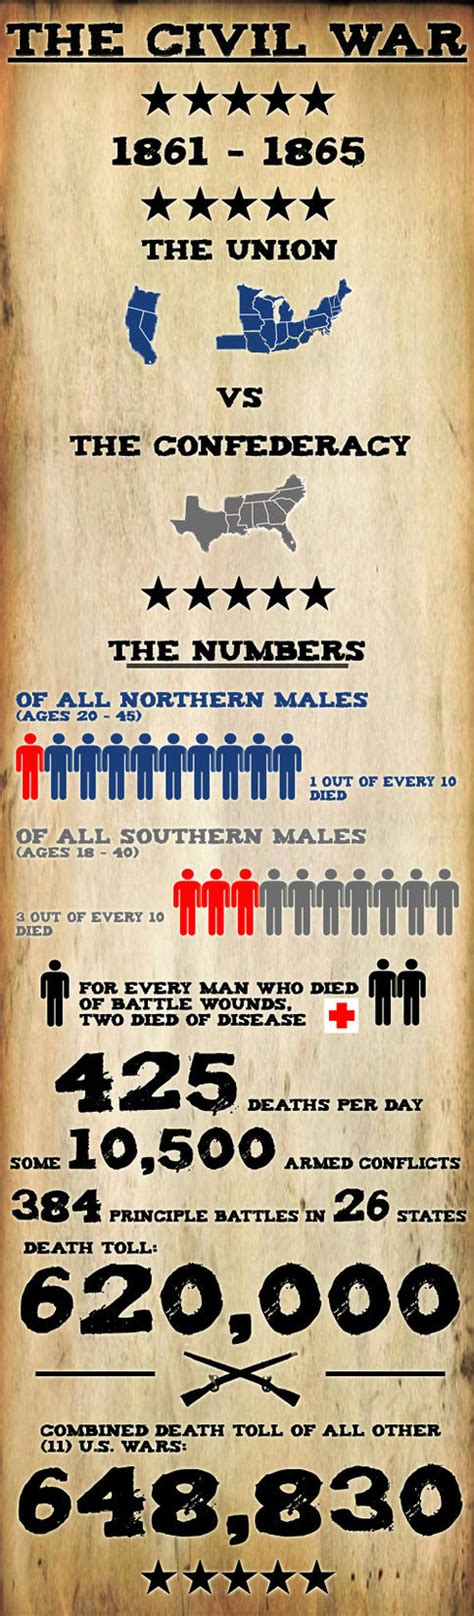 Civil War Infographic By Th3thr1ll3r On Deviantart